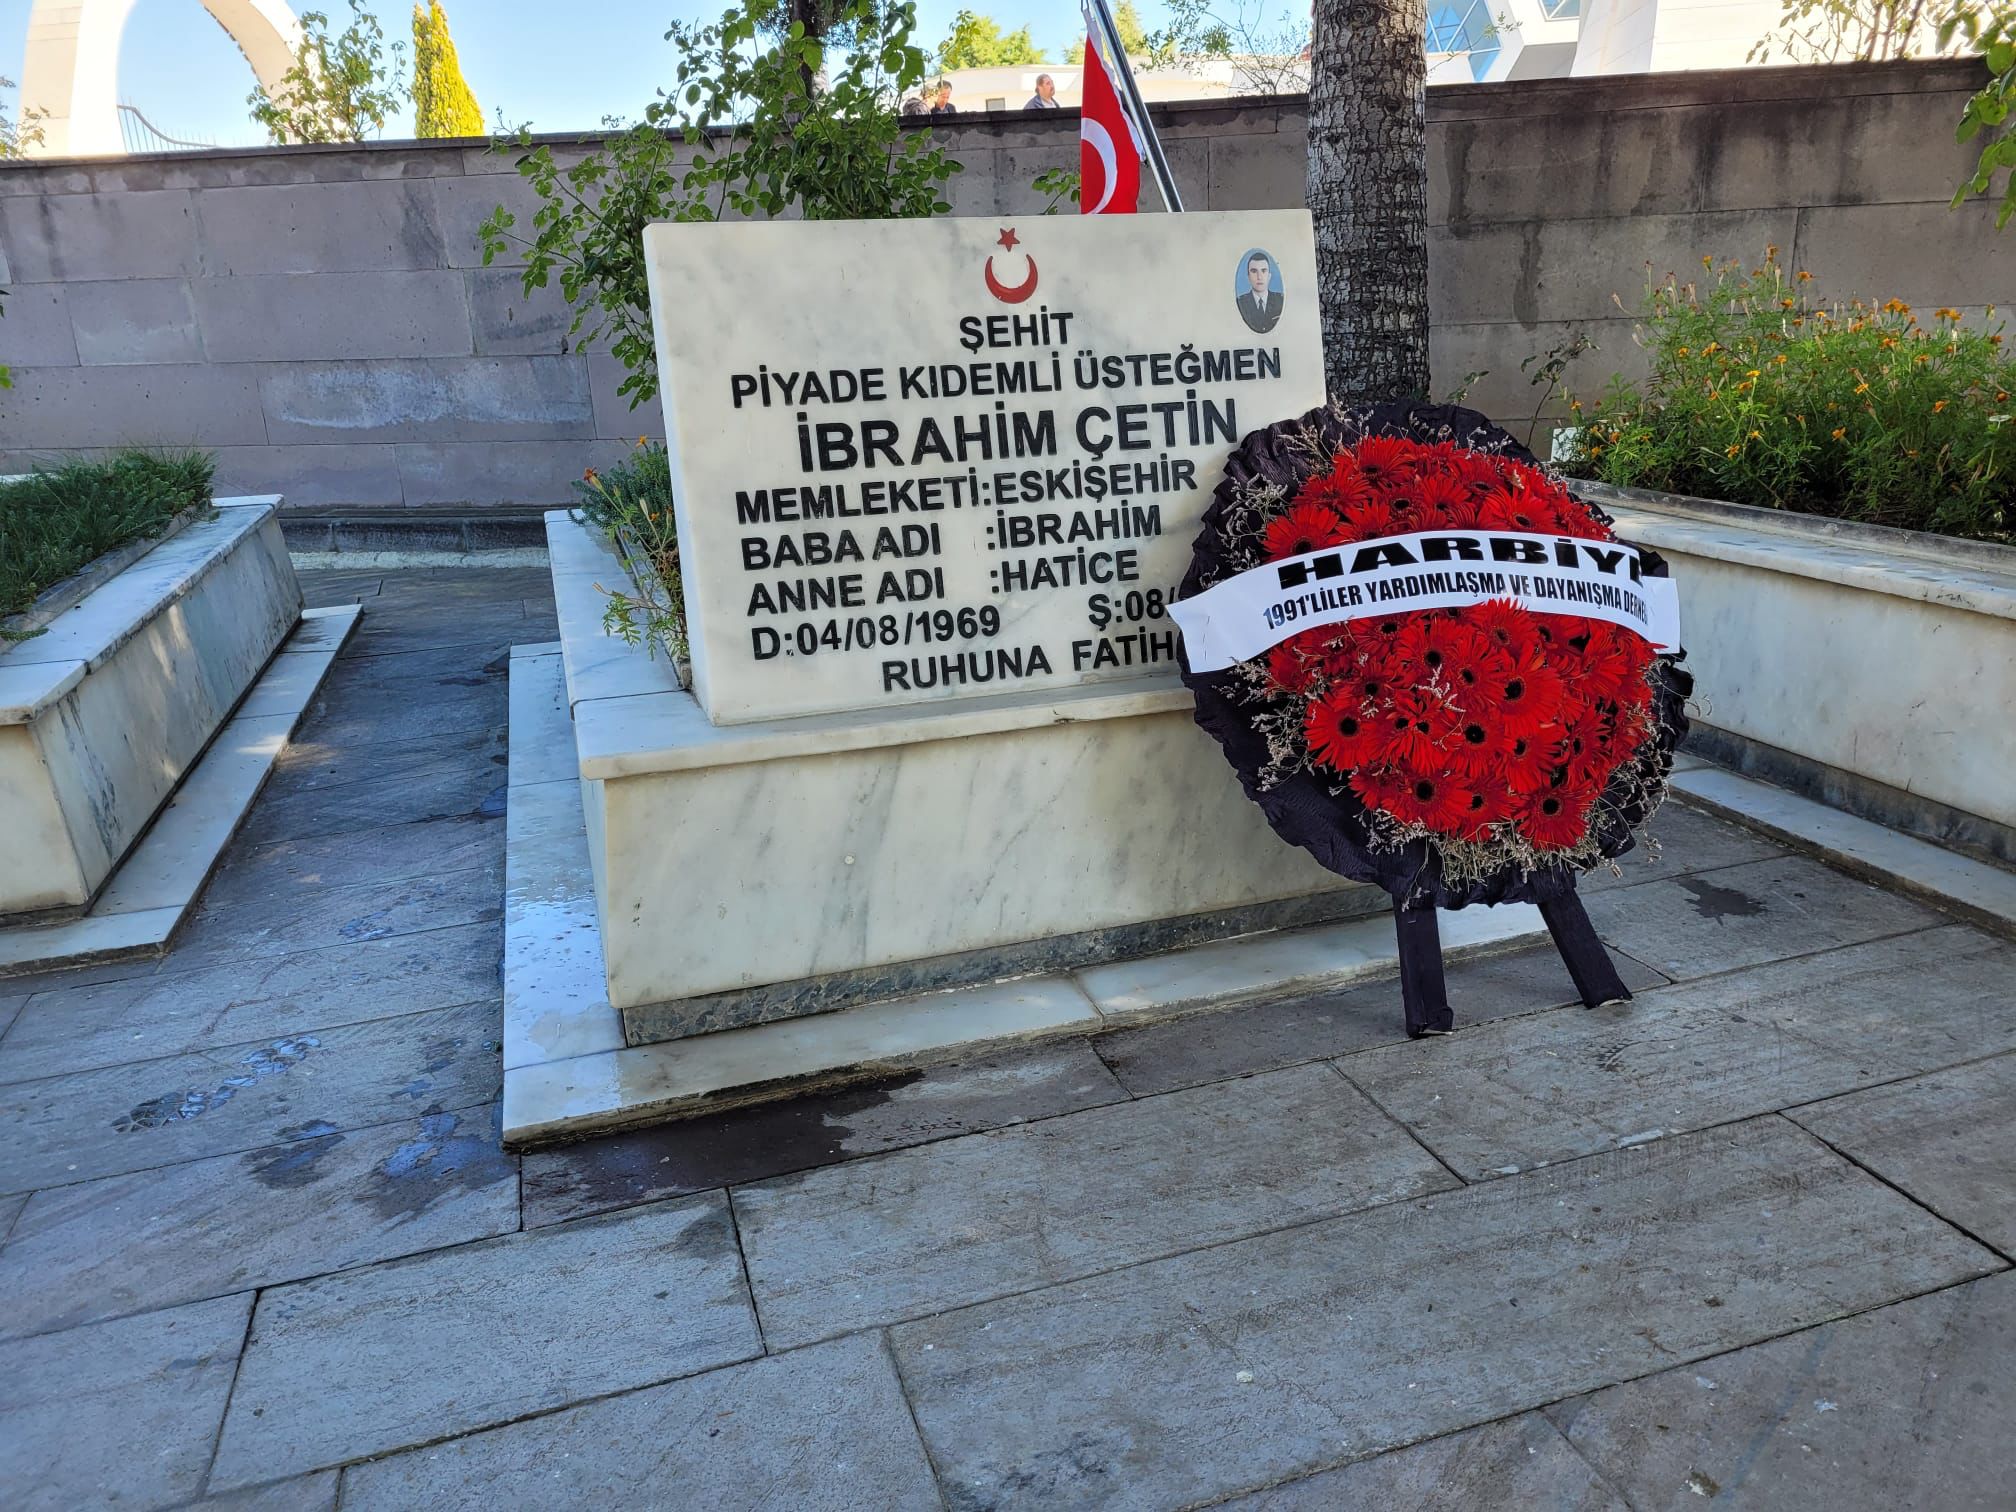 320 Şht.P.Kd.Ütğm. İbrahim ÇETİN Anma Töreni (08.10.2022)